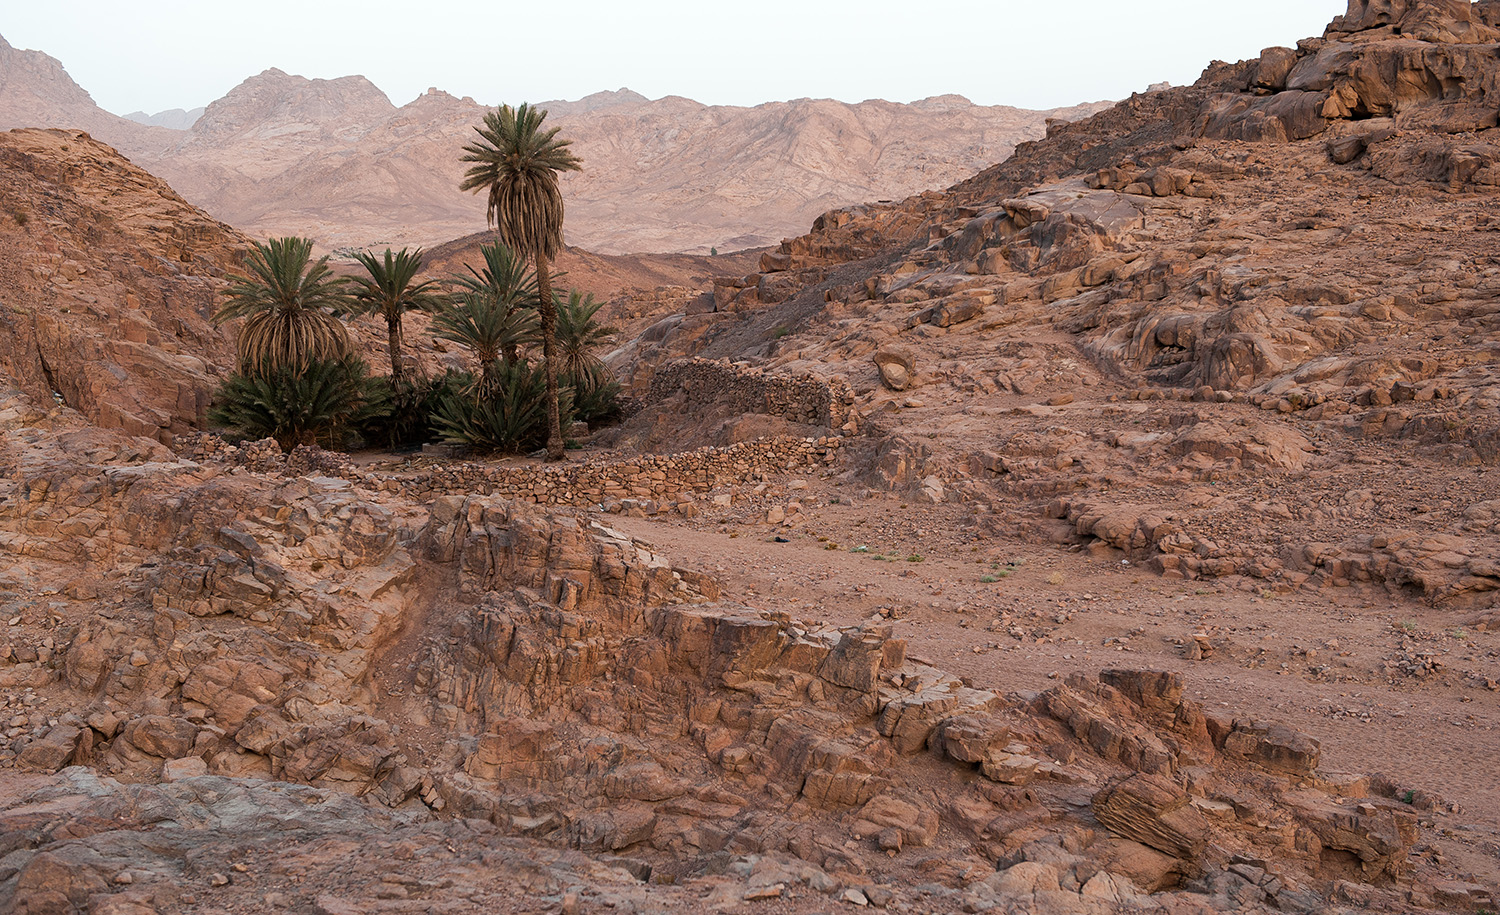 
The Sinai desert on May 12, 2008. Matt Moyer/Getty Images.






